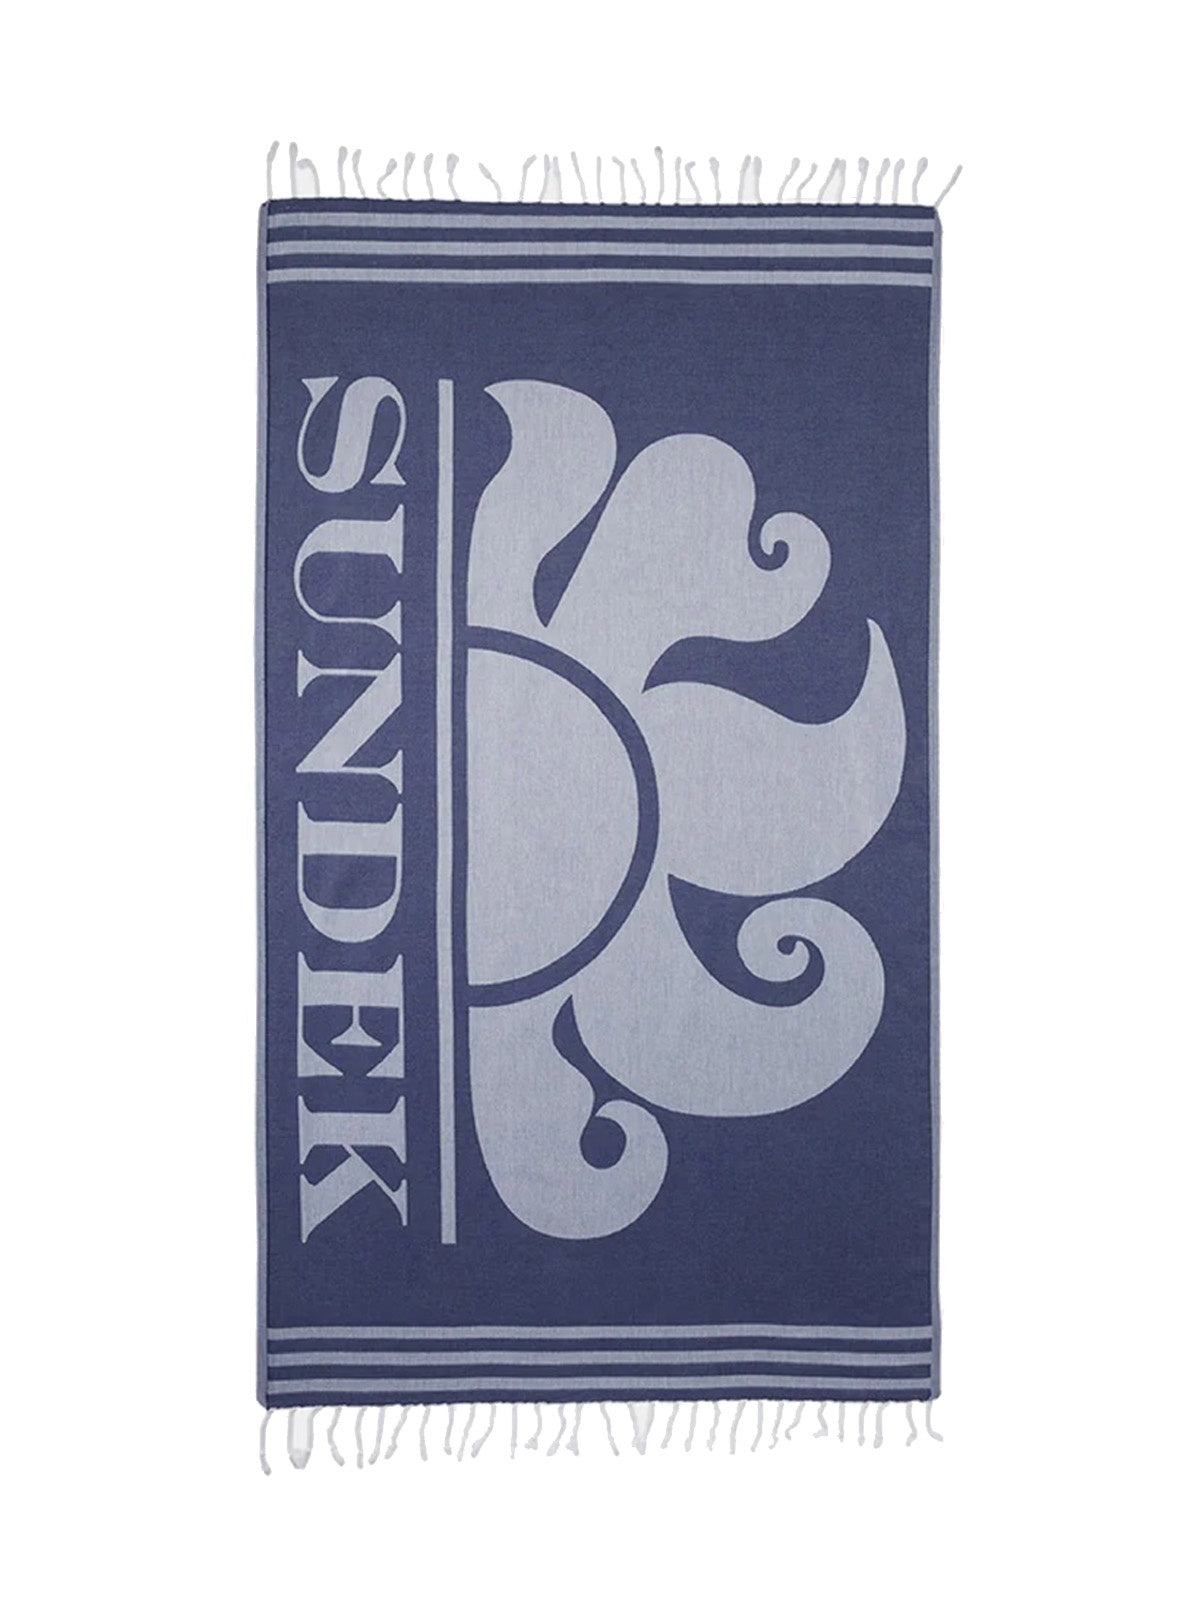 Teli mare Unisex Sundek - Telo Mare Fouta Jacquard Con Logo - Blu